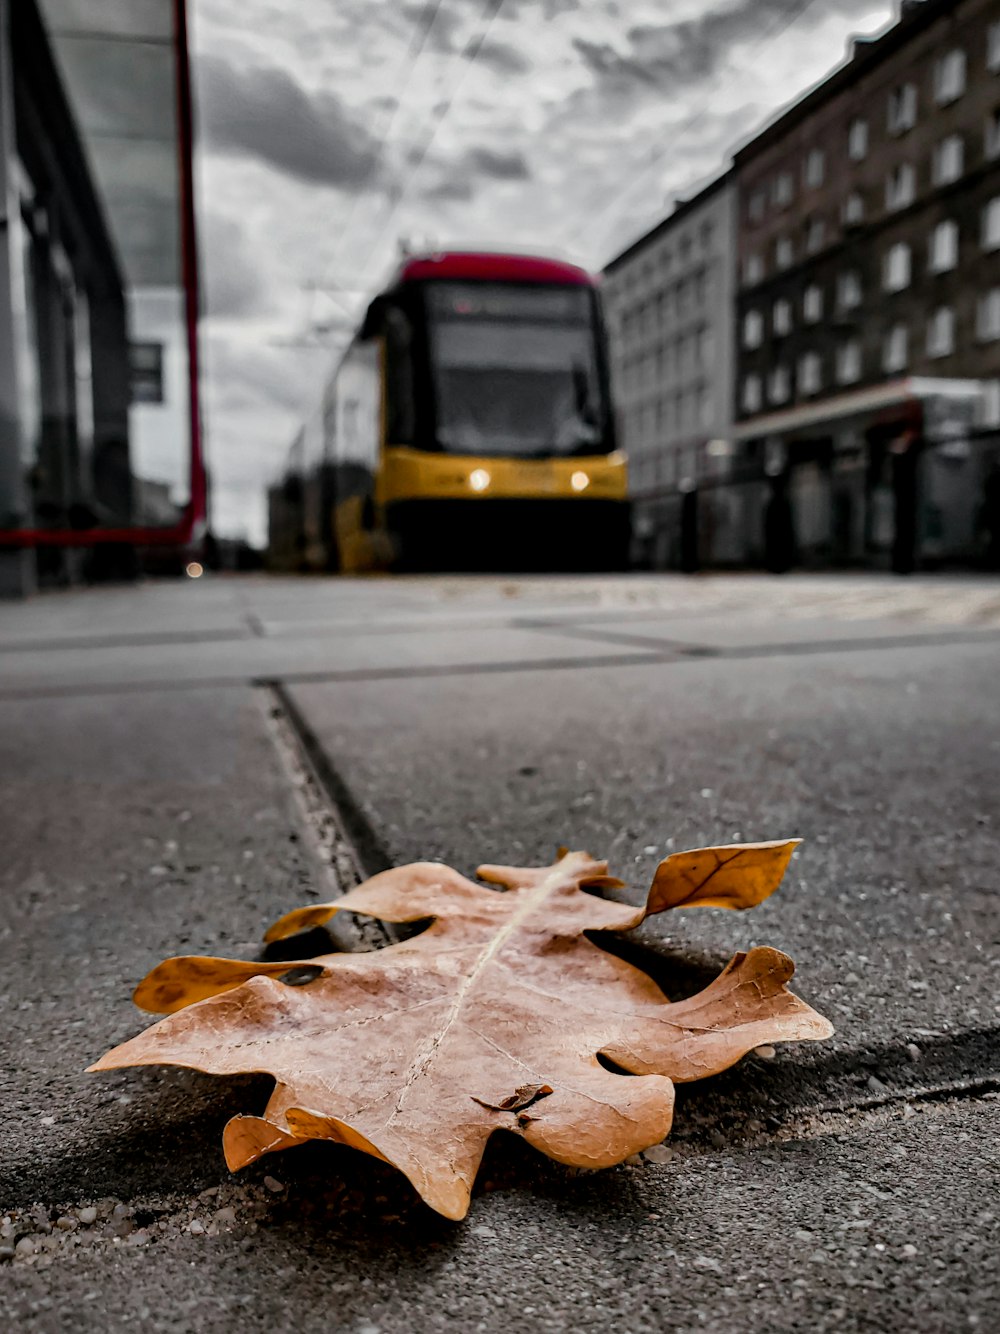 dried leaf on pavement near bus